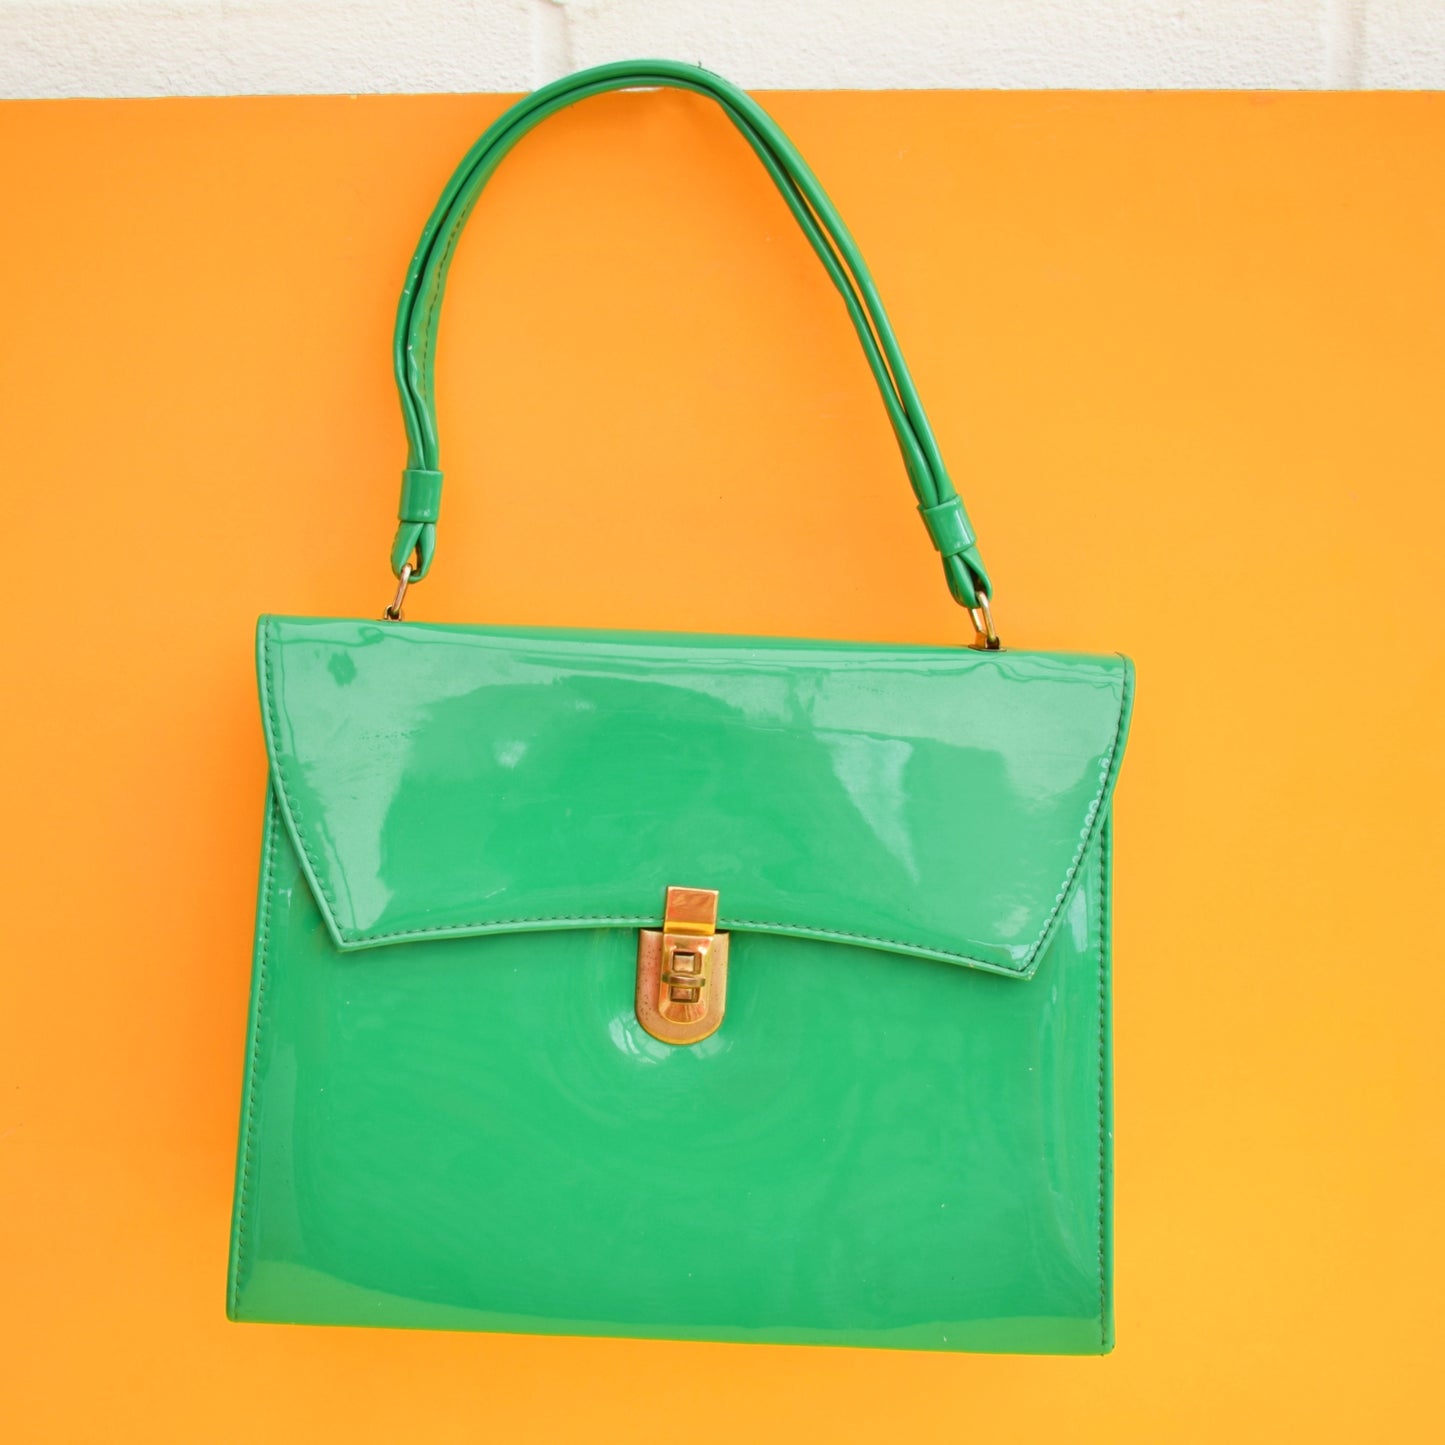 Vintage 1960s Patent Handbag - Emerald Green